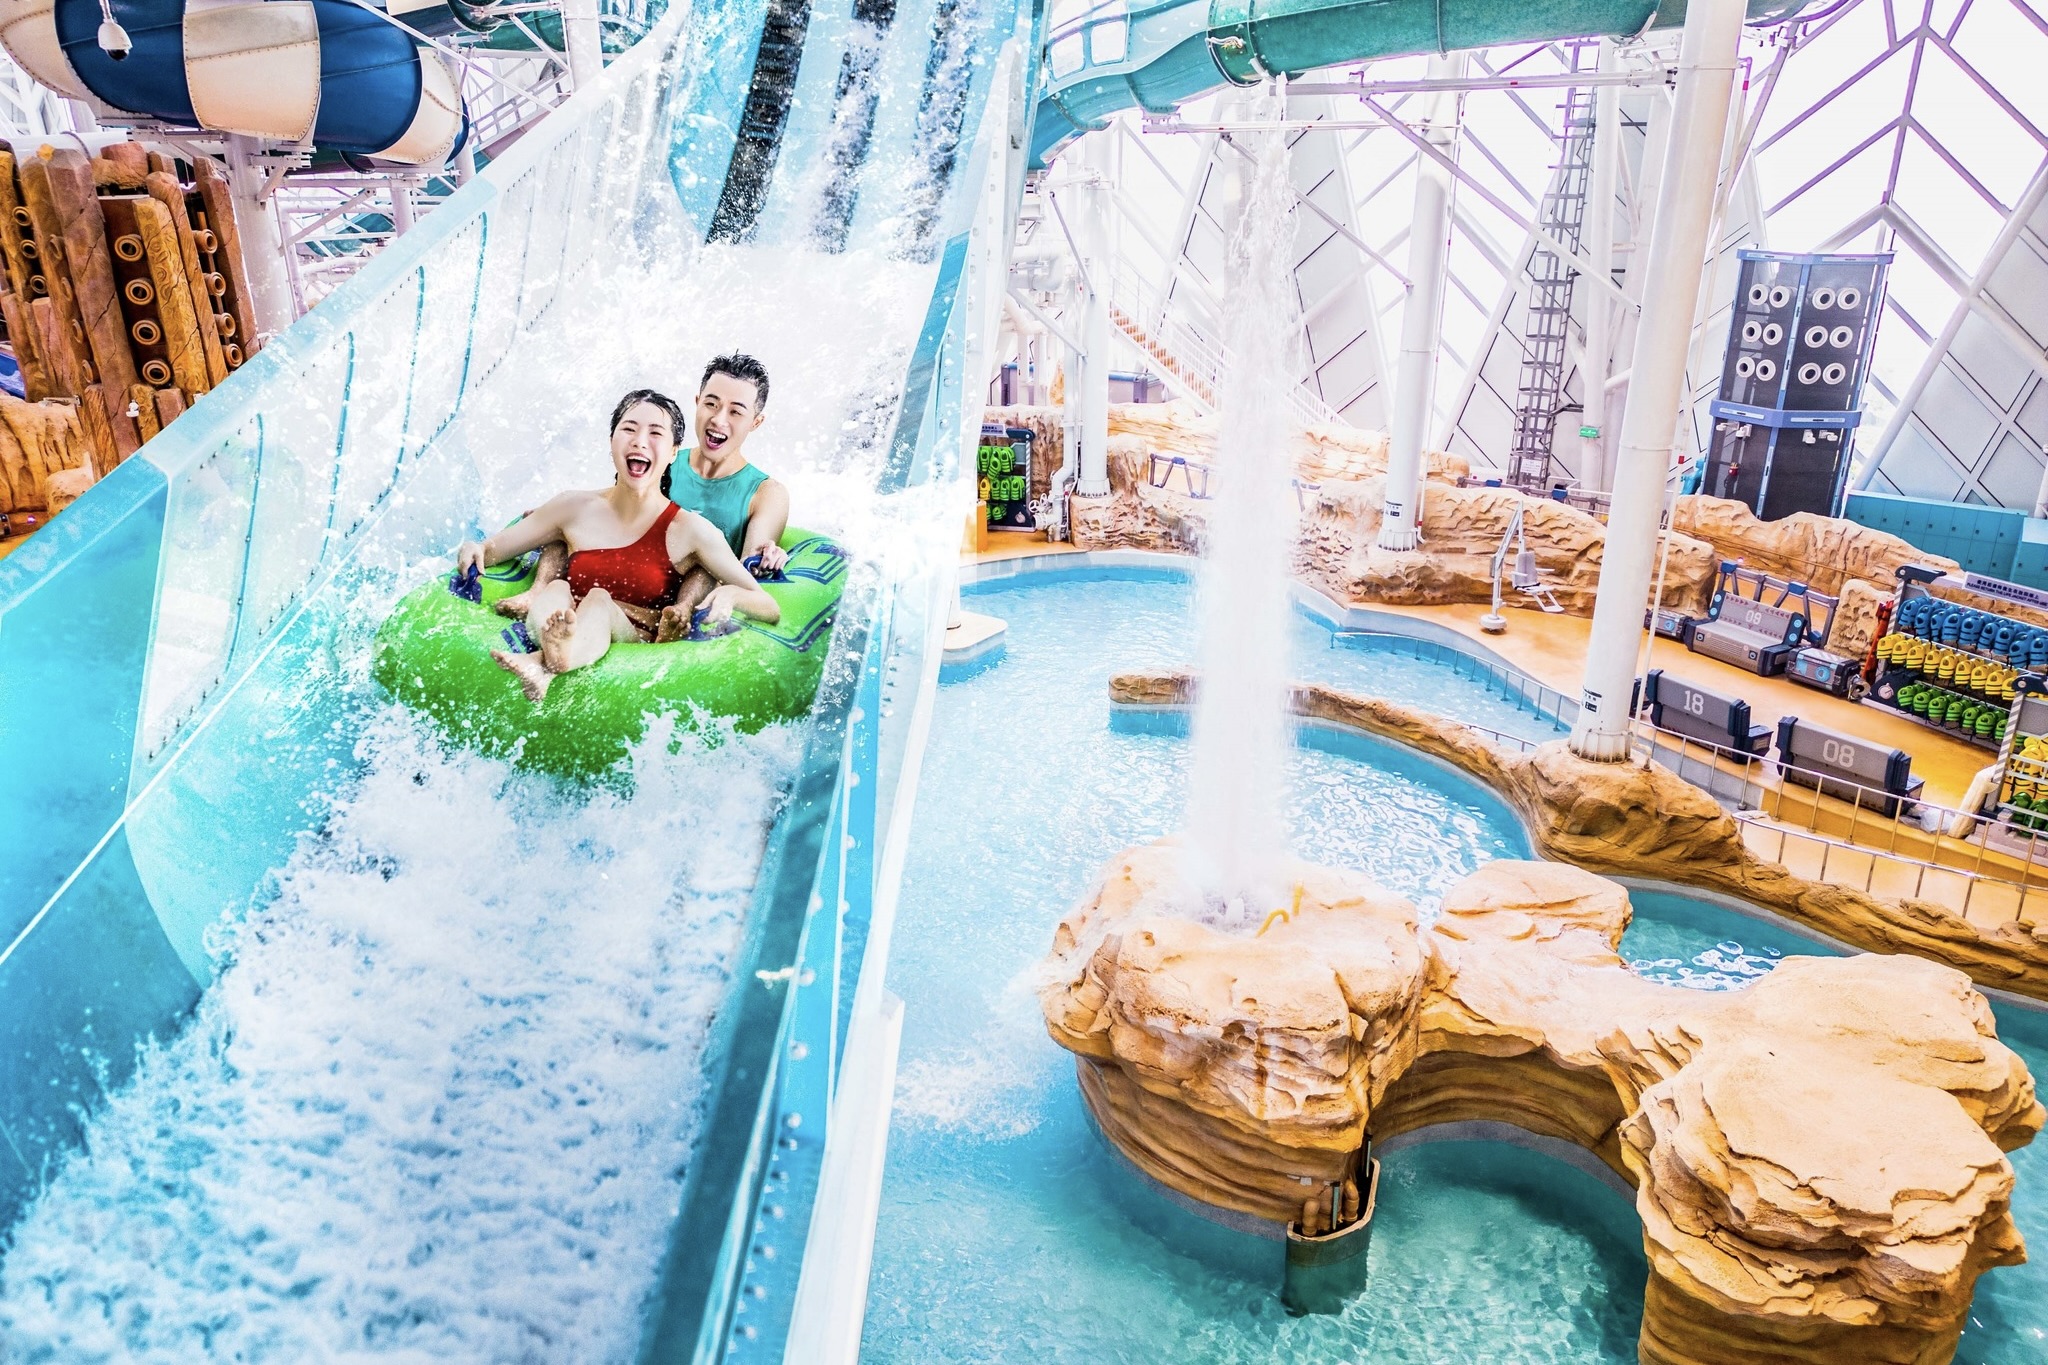 Make a splash at Studio City Indoor Water Park in Macau.